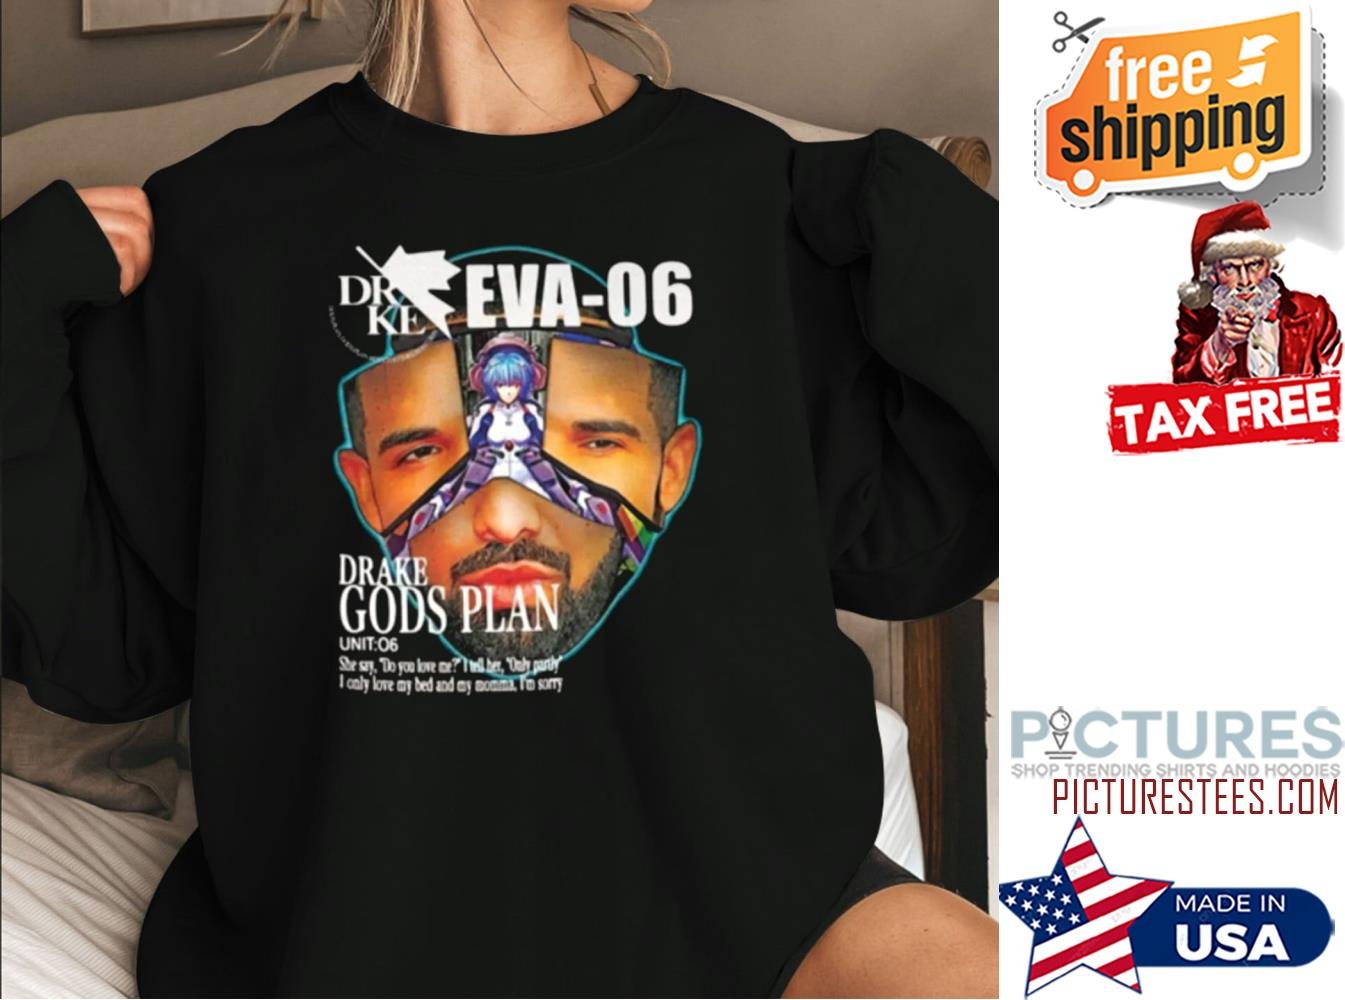 https://images.picturestees.com/2021/12/drake-evangelion-eva-06-gods-plan-sweatshirt-picturestees-shirt.jpg